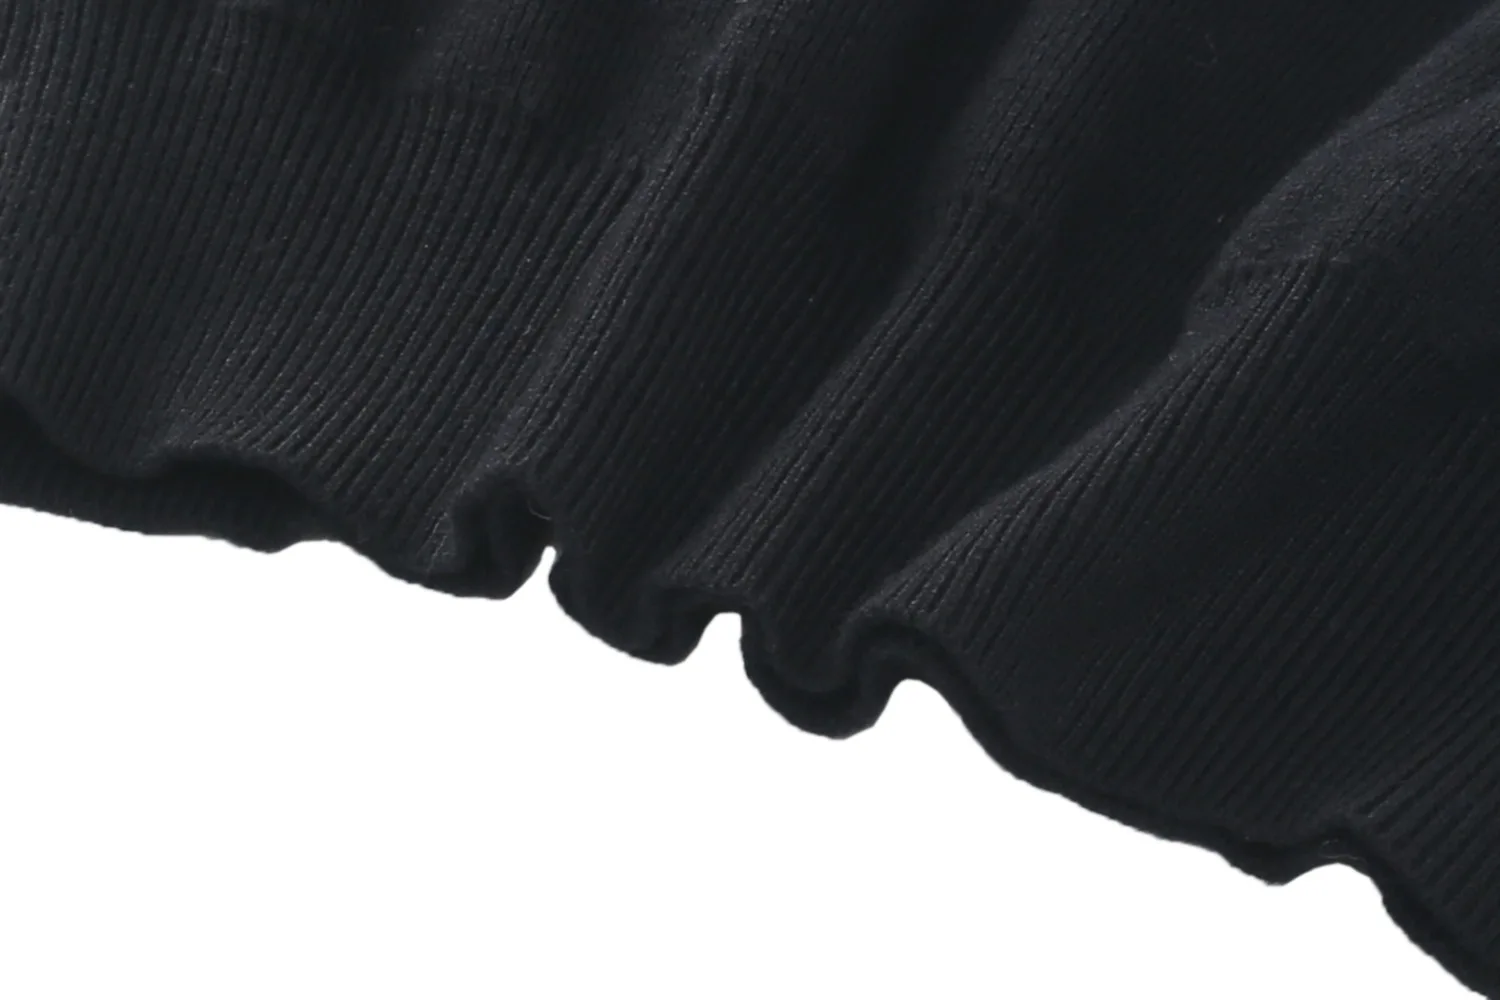 Thick Mushroom 3D applique Black Oversize Sweatshirt